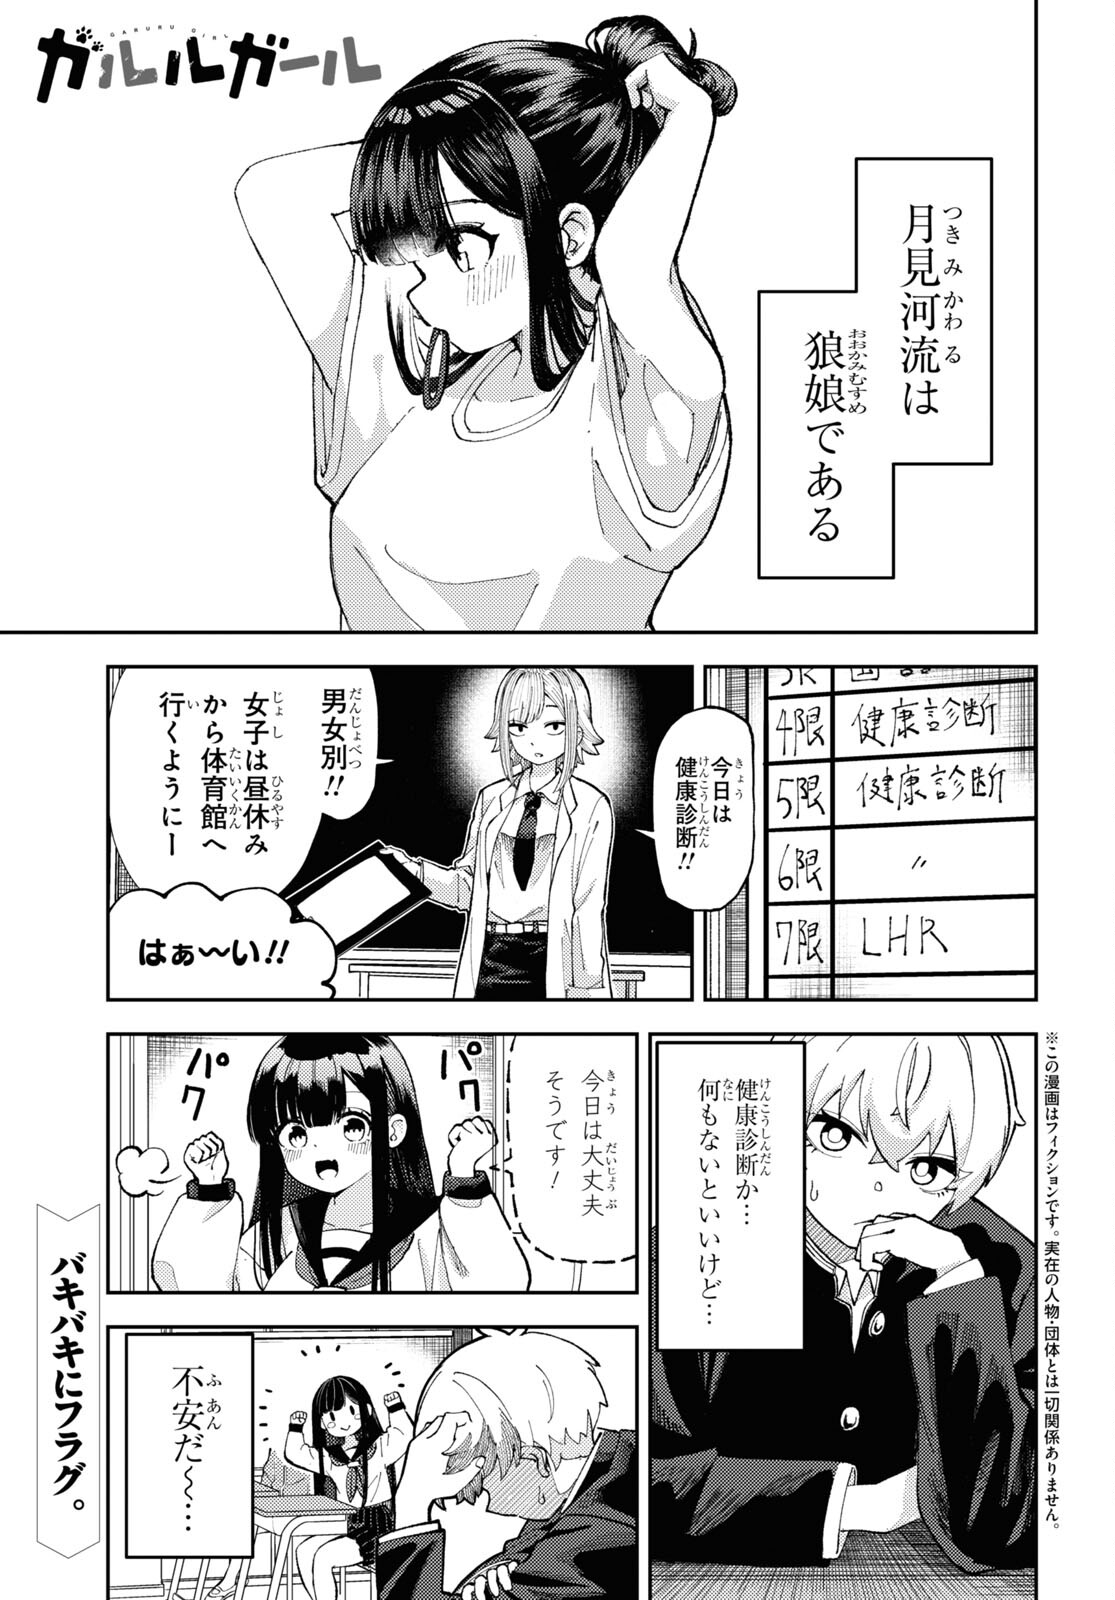 Garuru Girl - Chapter 3 - Page 1